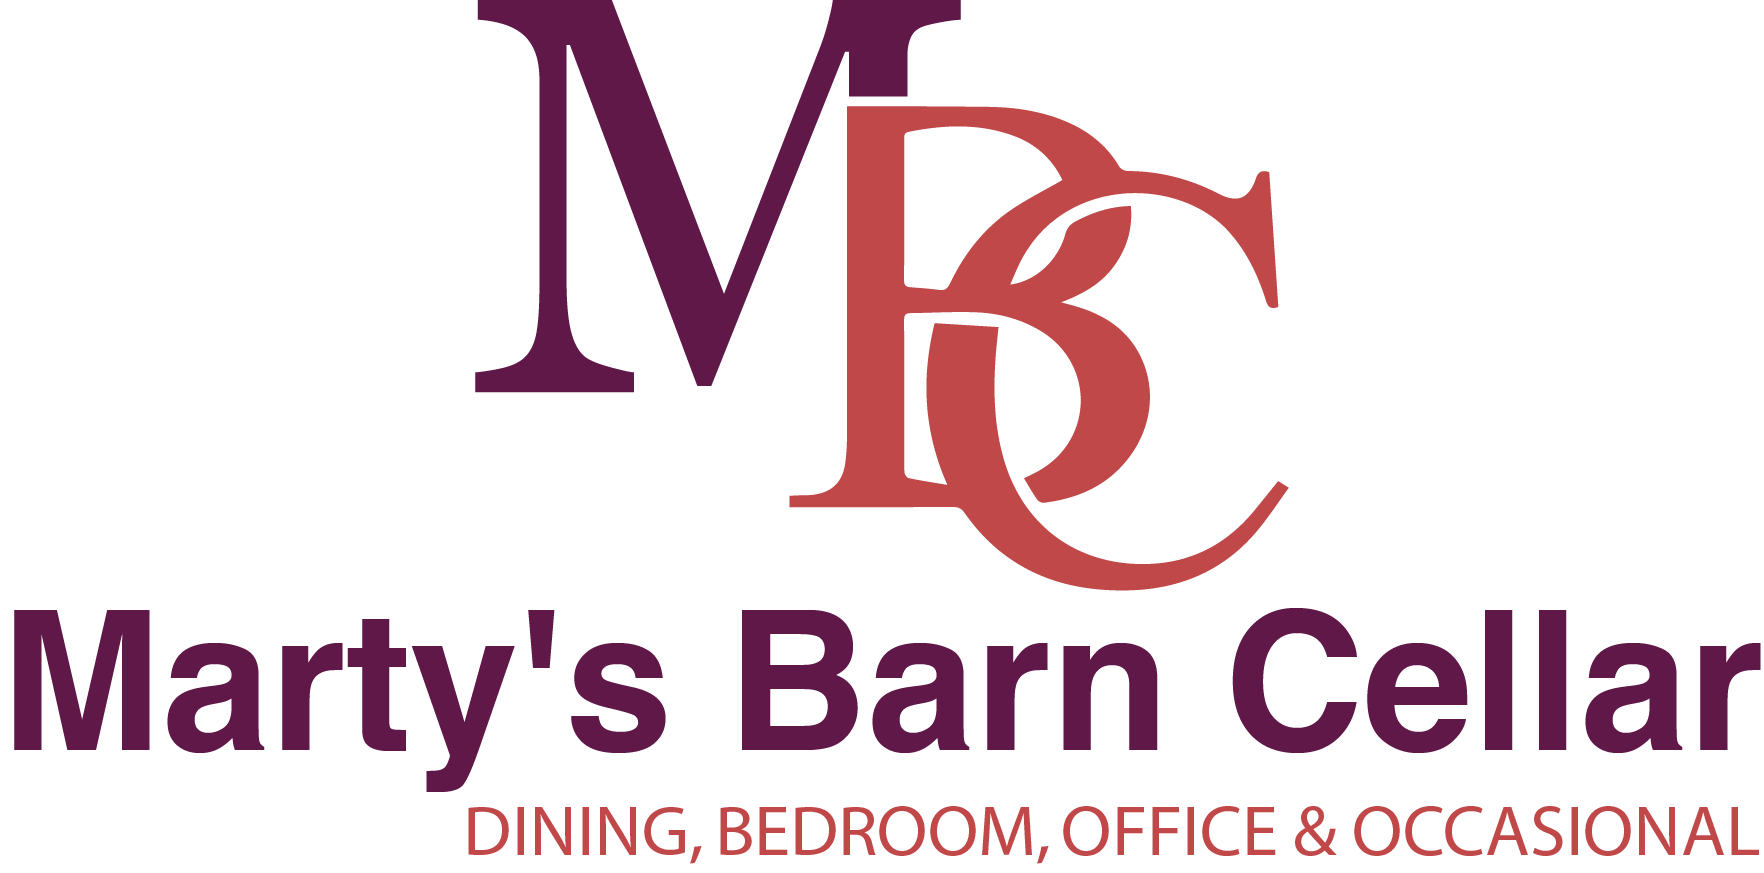 Marty's Barn Cellar logo